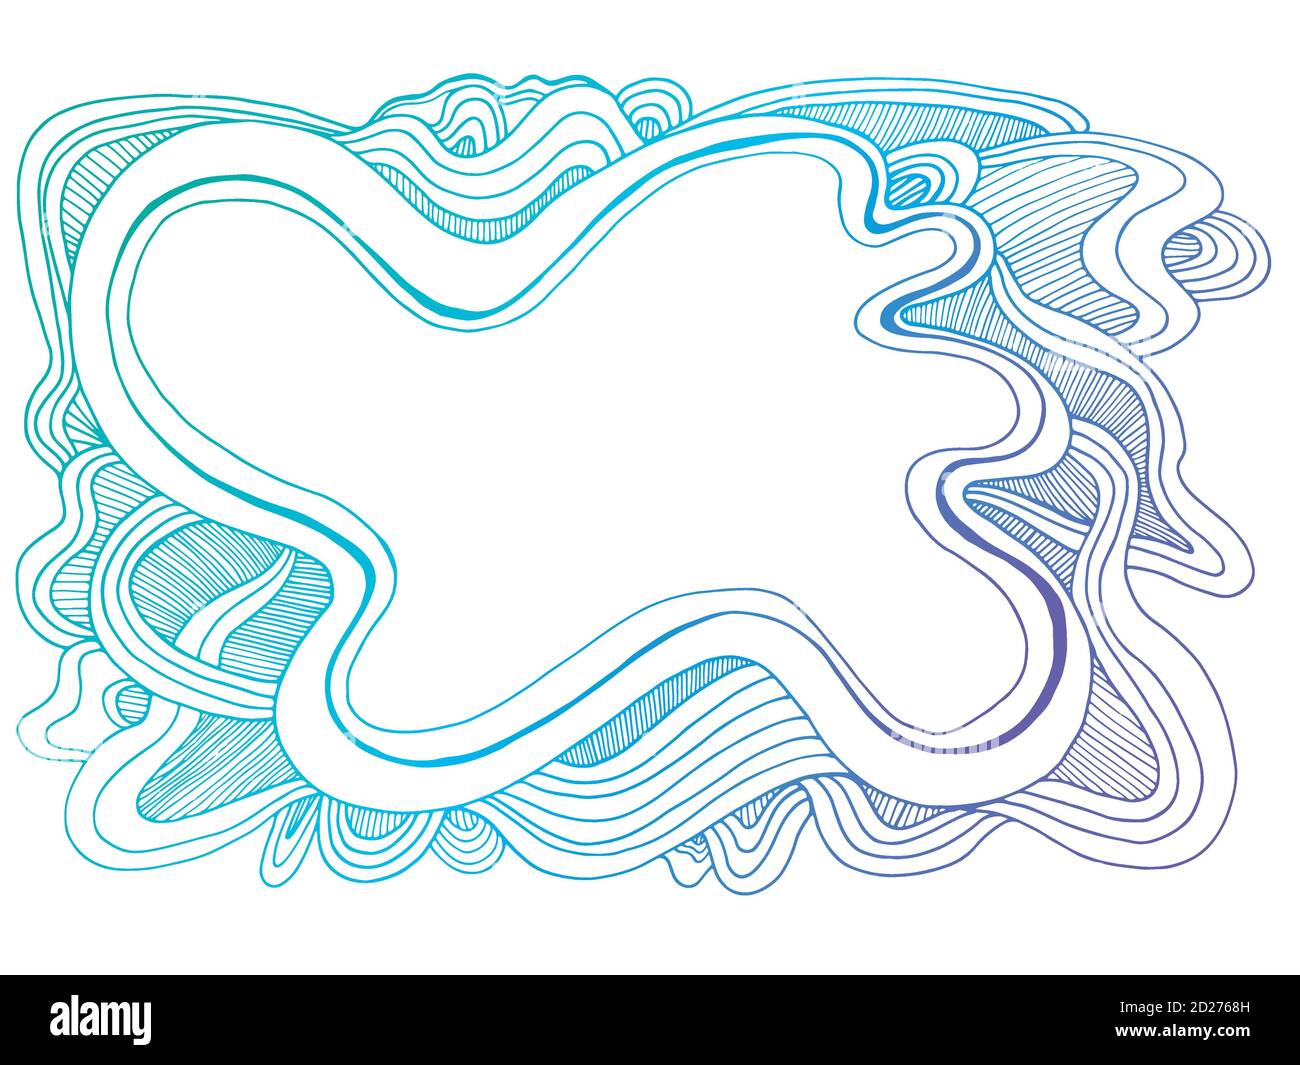 Blue and dark blue decorative doodles waves frame Stock Vector